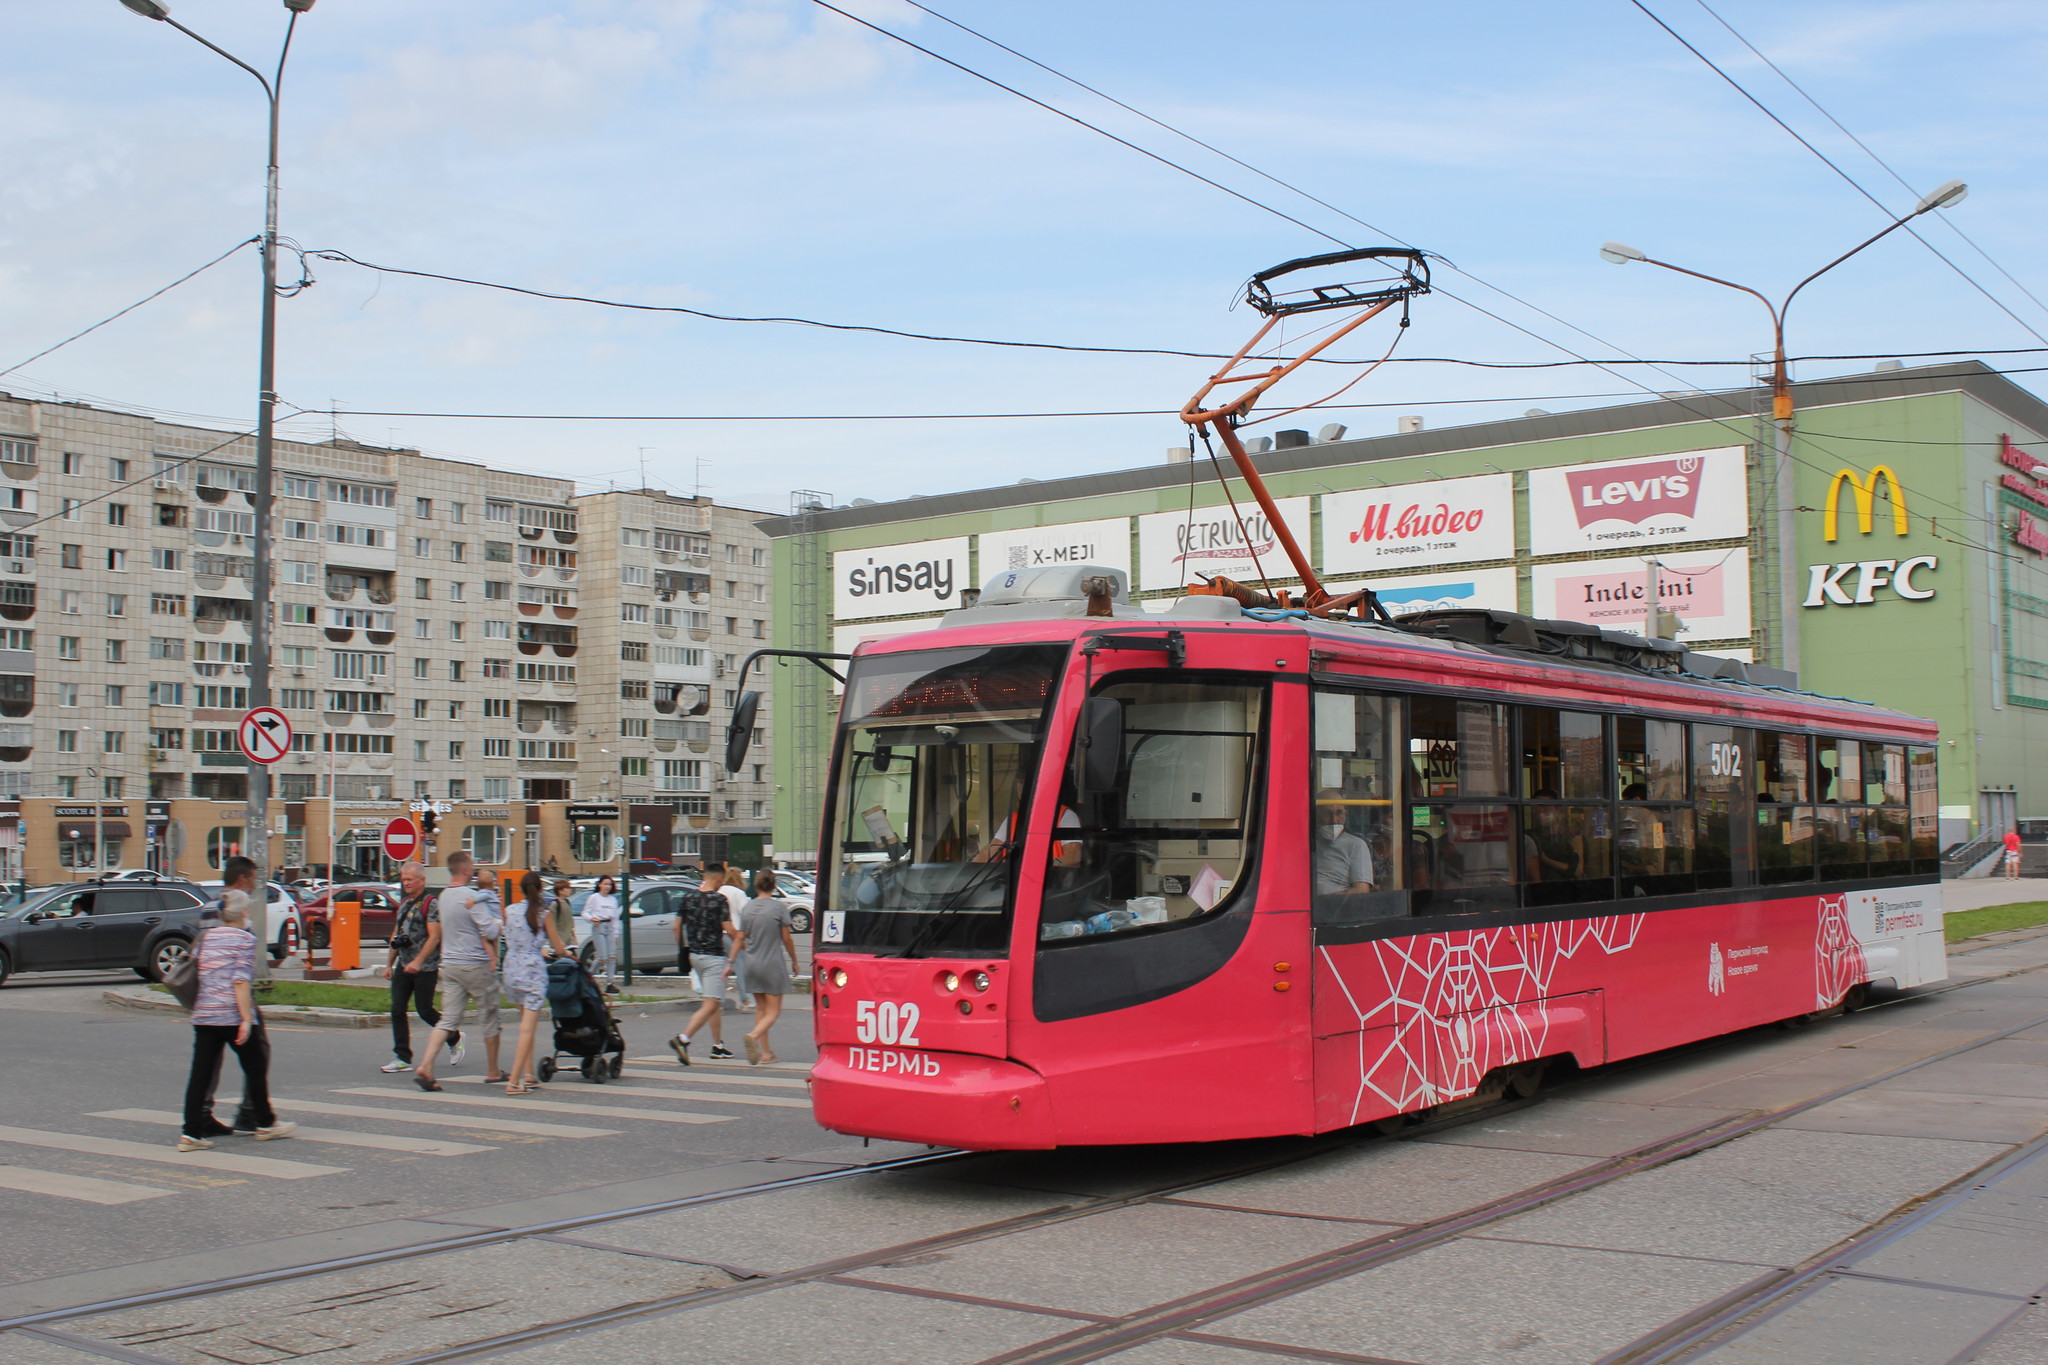 Пермские трамваи фото